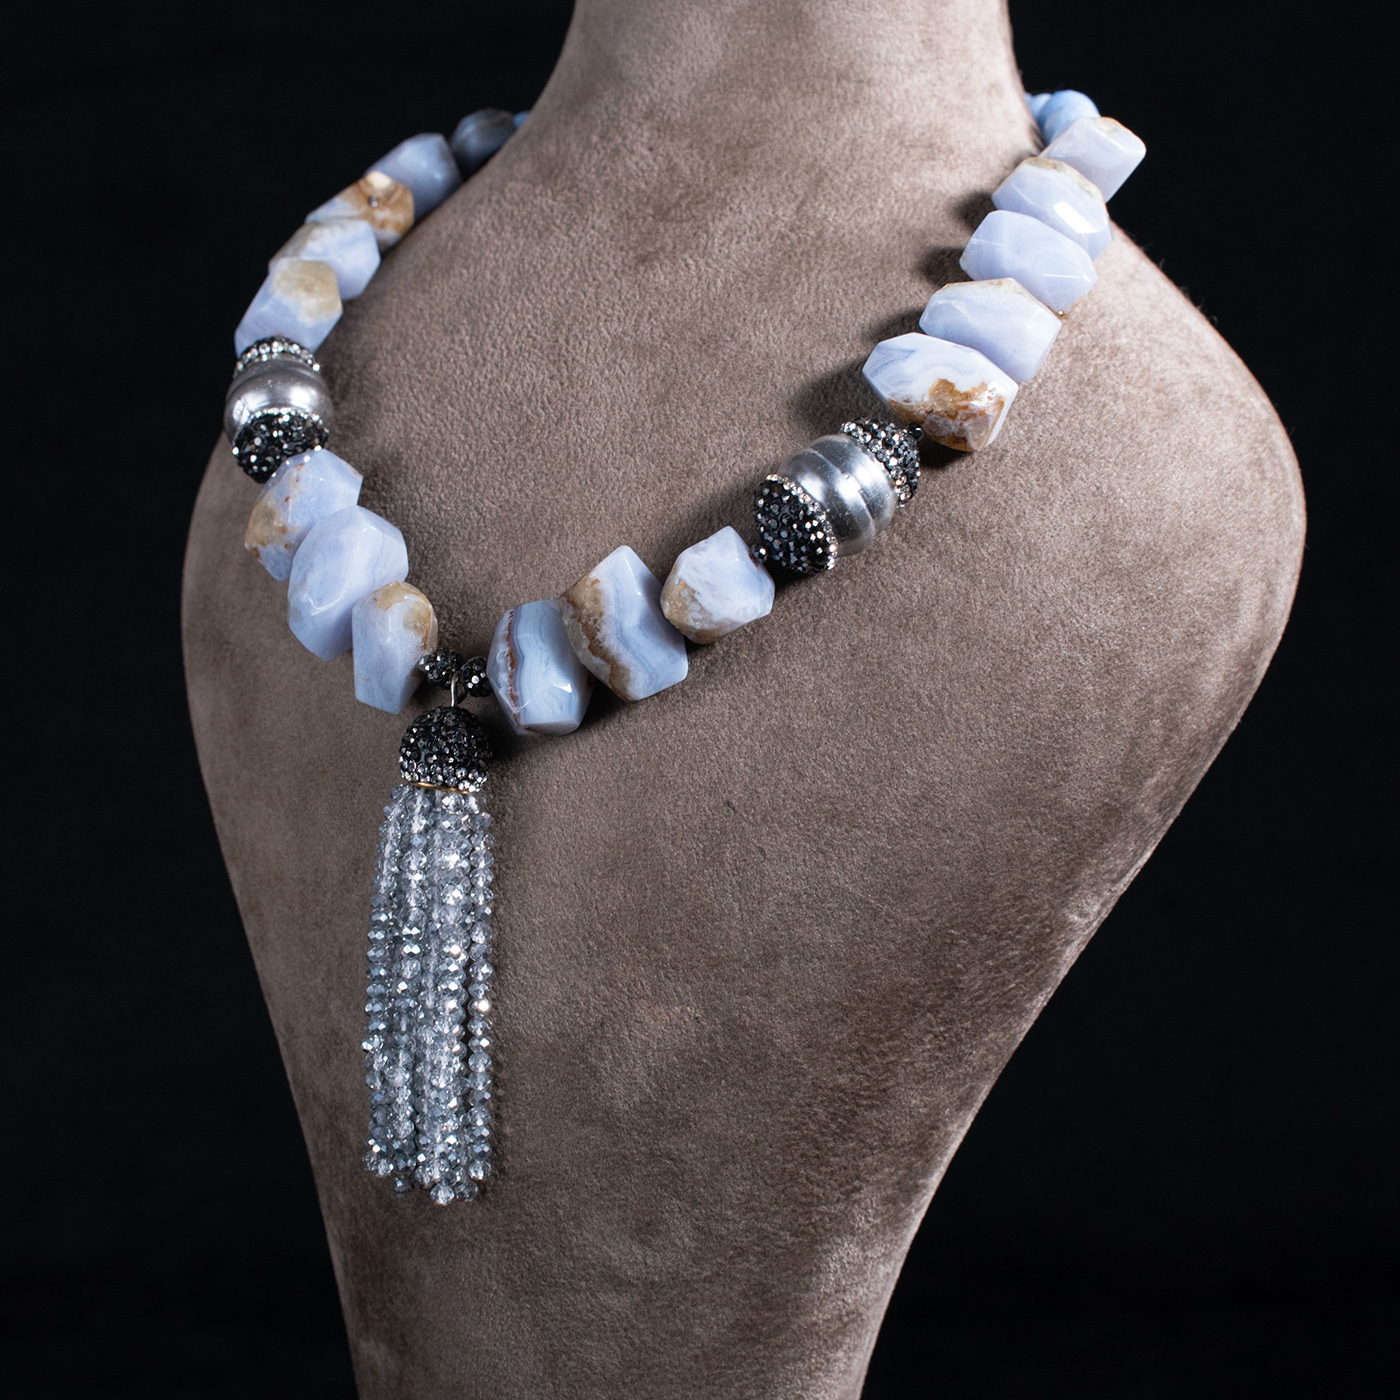 chile collares Fashion  FotografiaModa moda Necklace piedras preciosas Precious stones